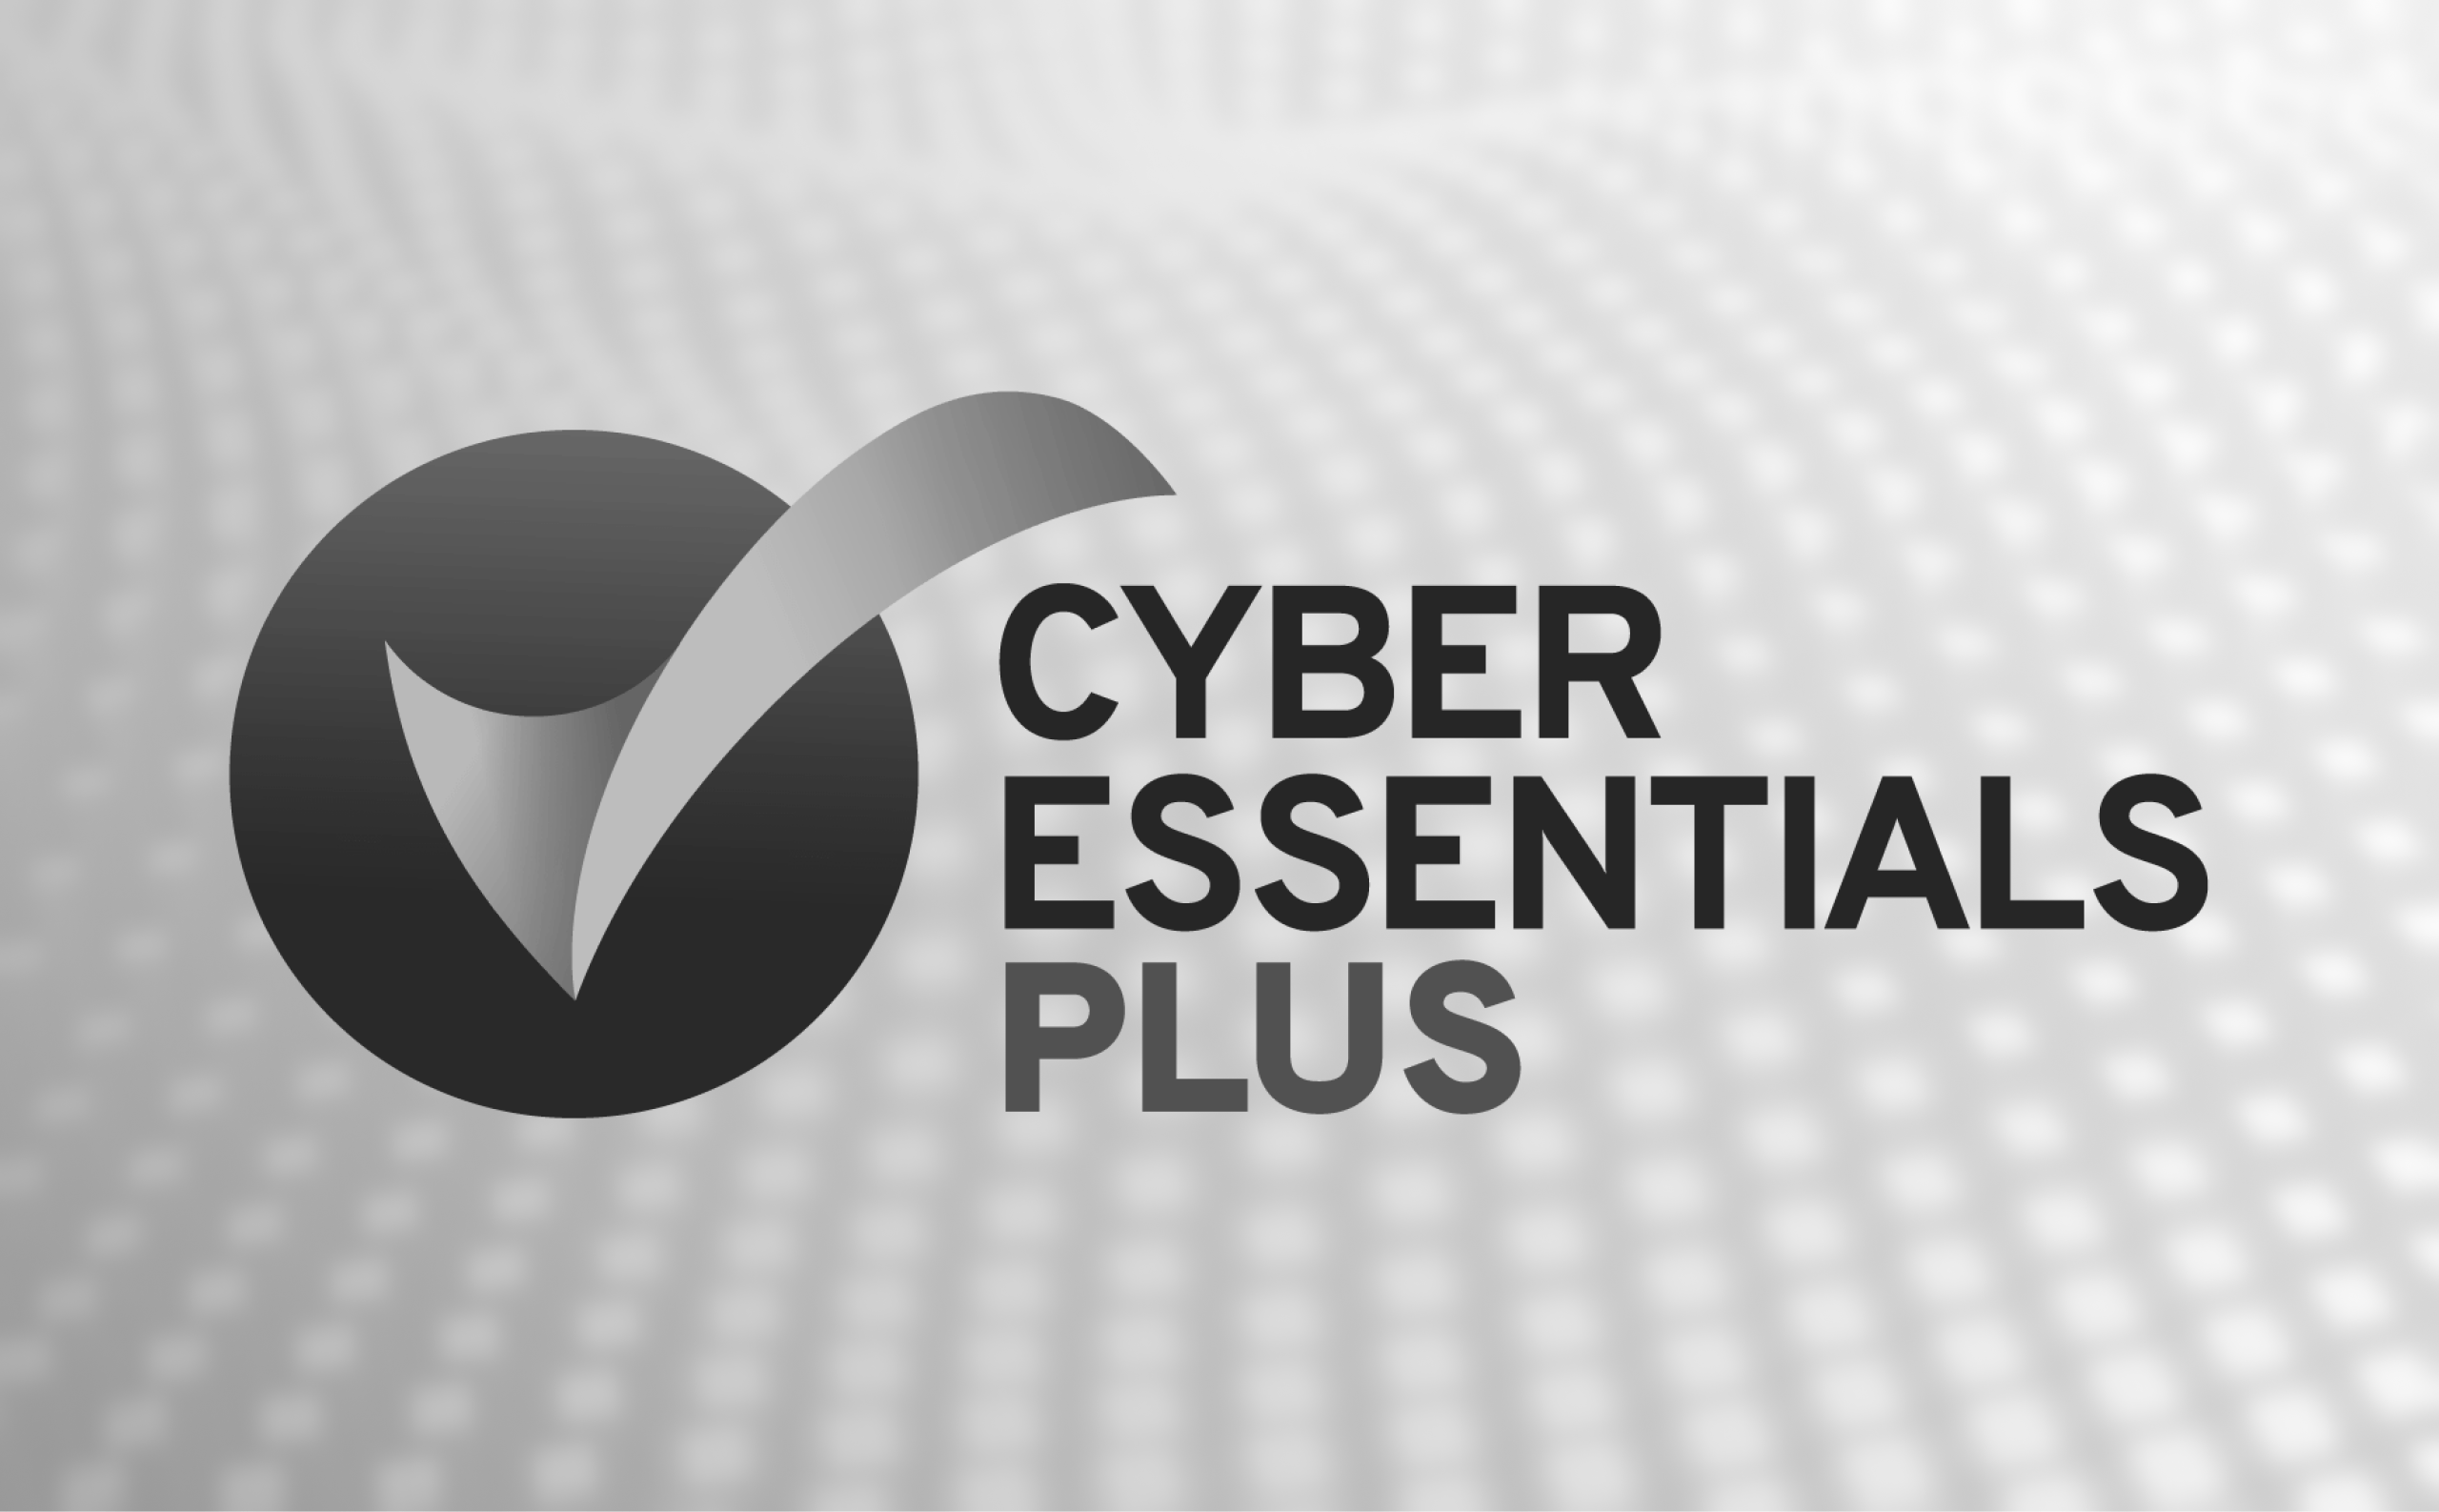 A greyscale visual of Cyber Essentials Plus' logo on a wavy background